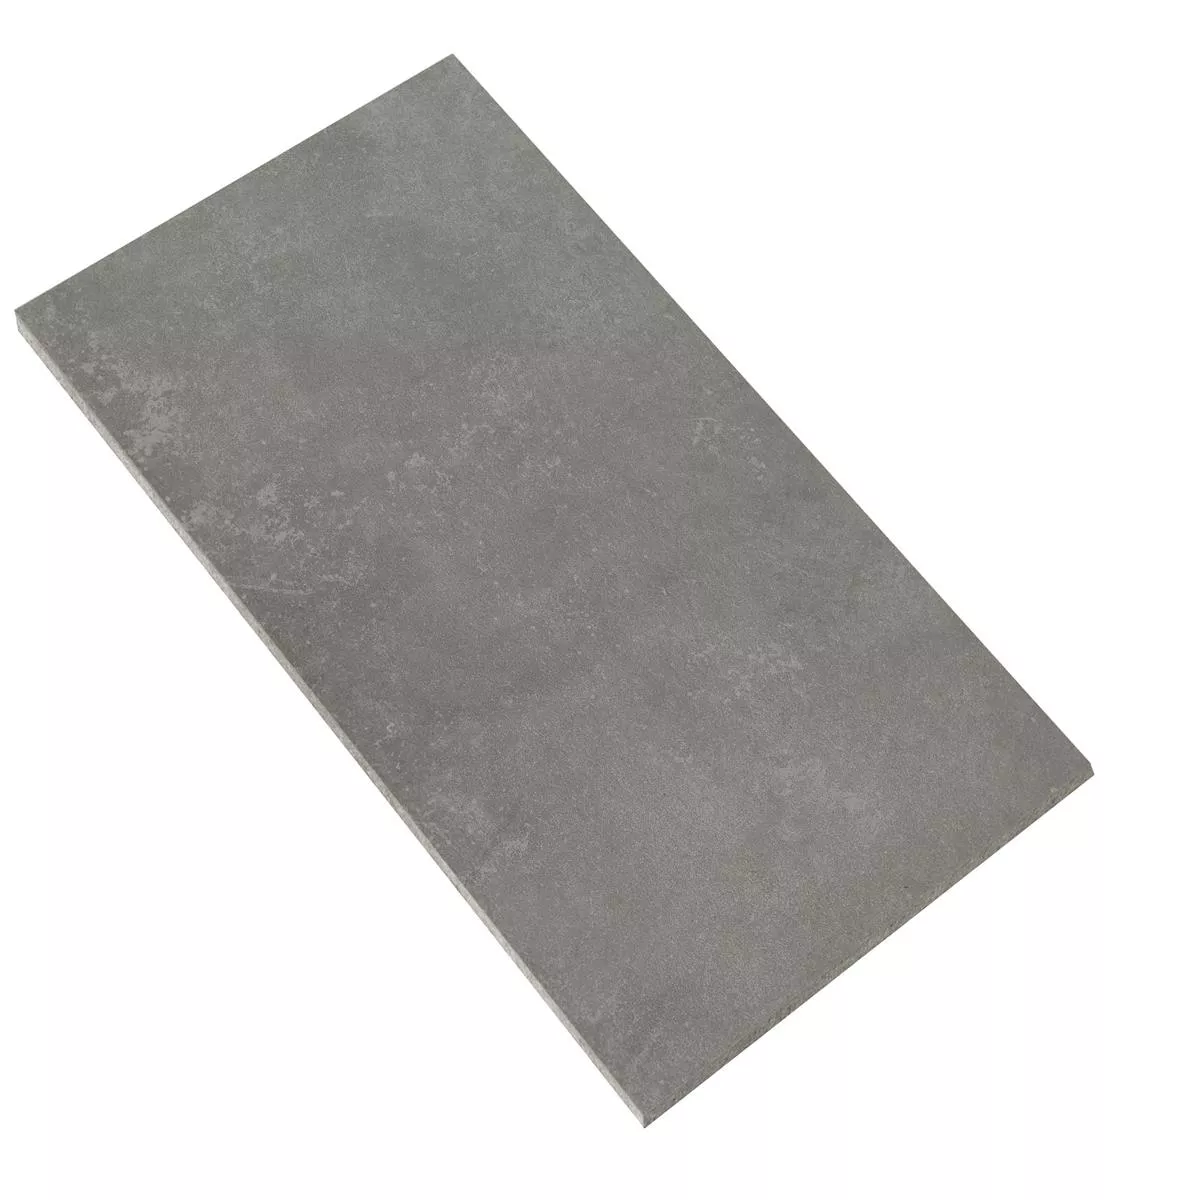 Sample Vloertegels Cement Optic Nepal Slim Grijs Beige 50x100cm